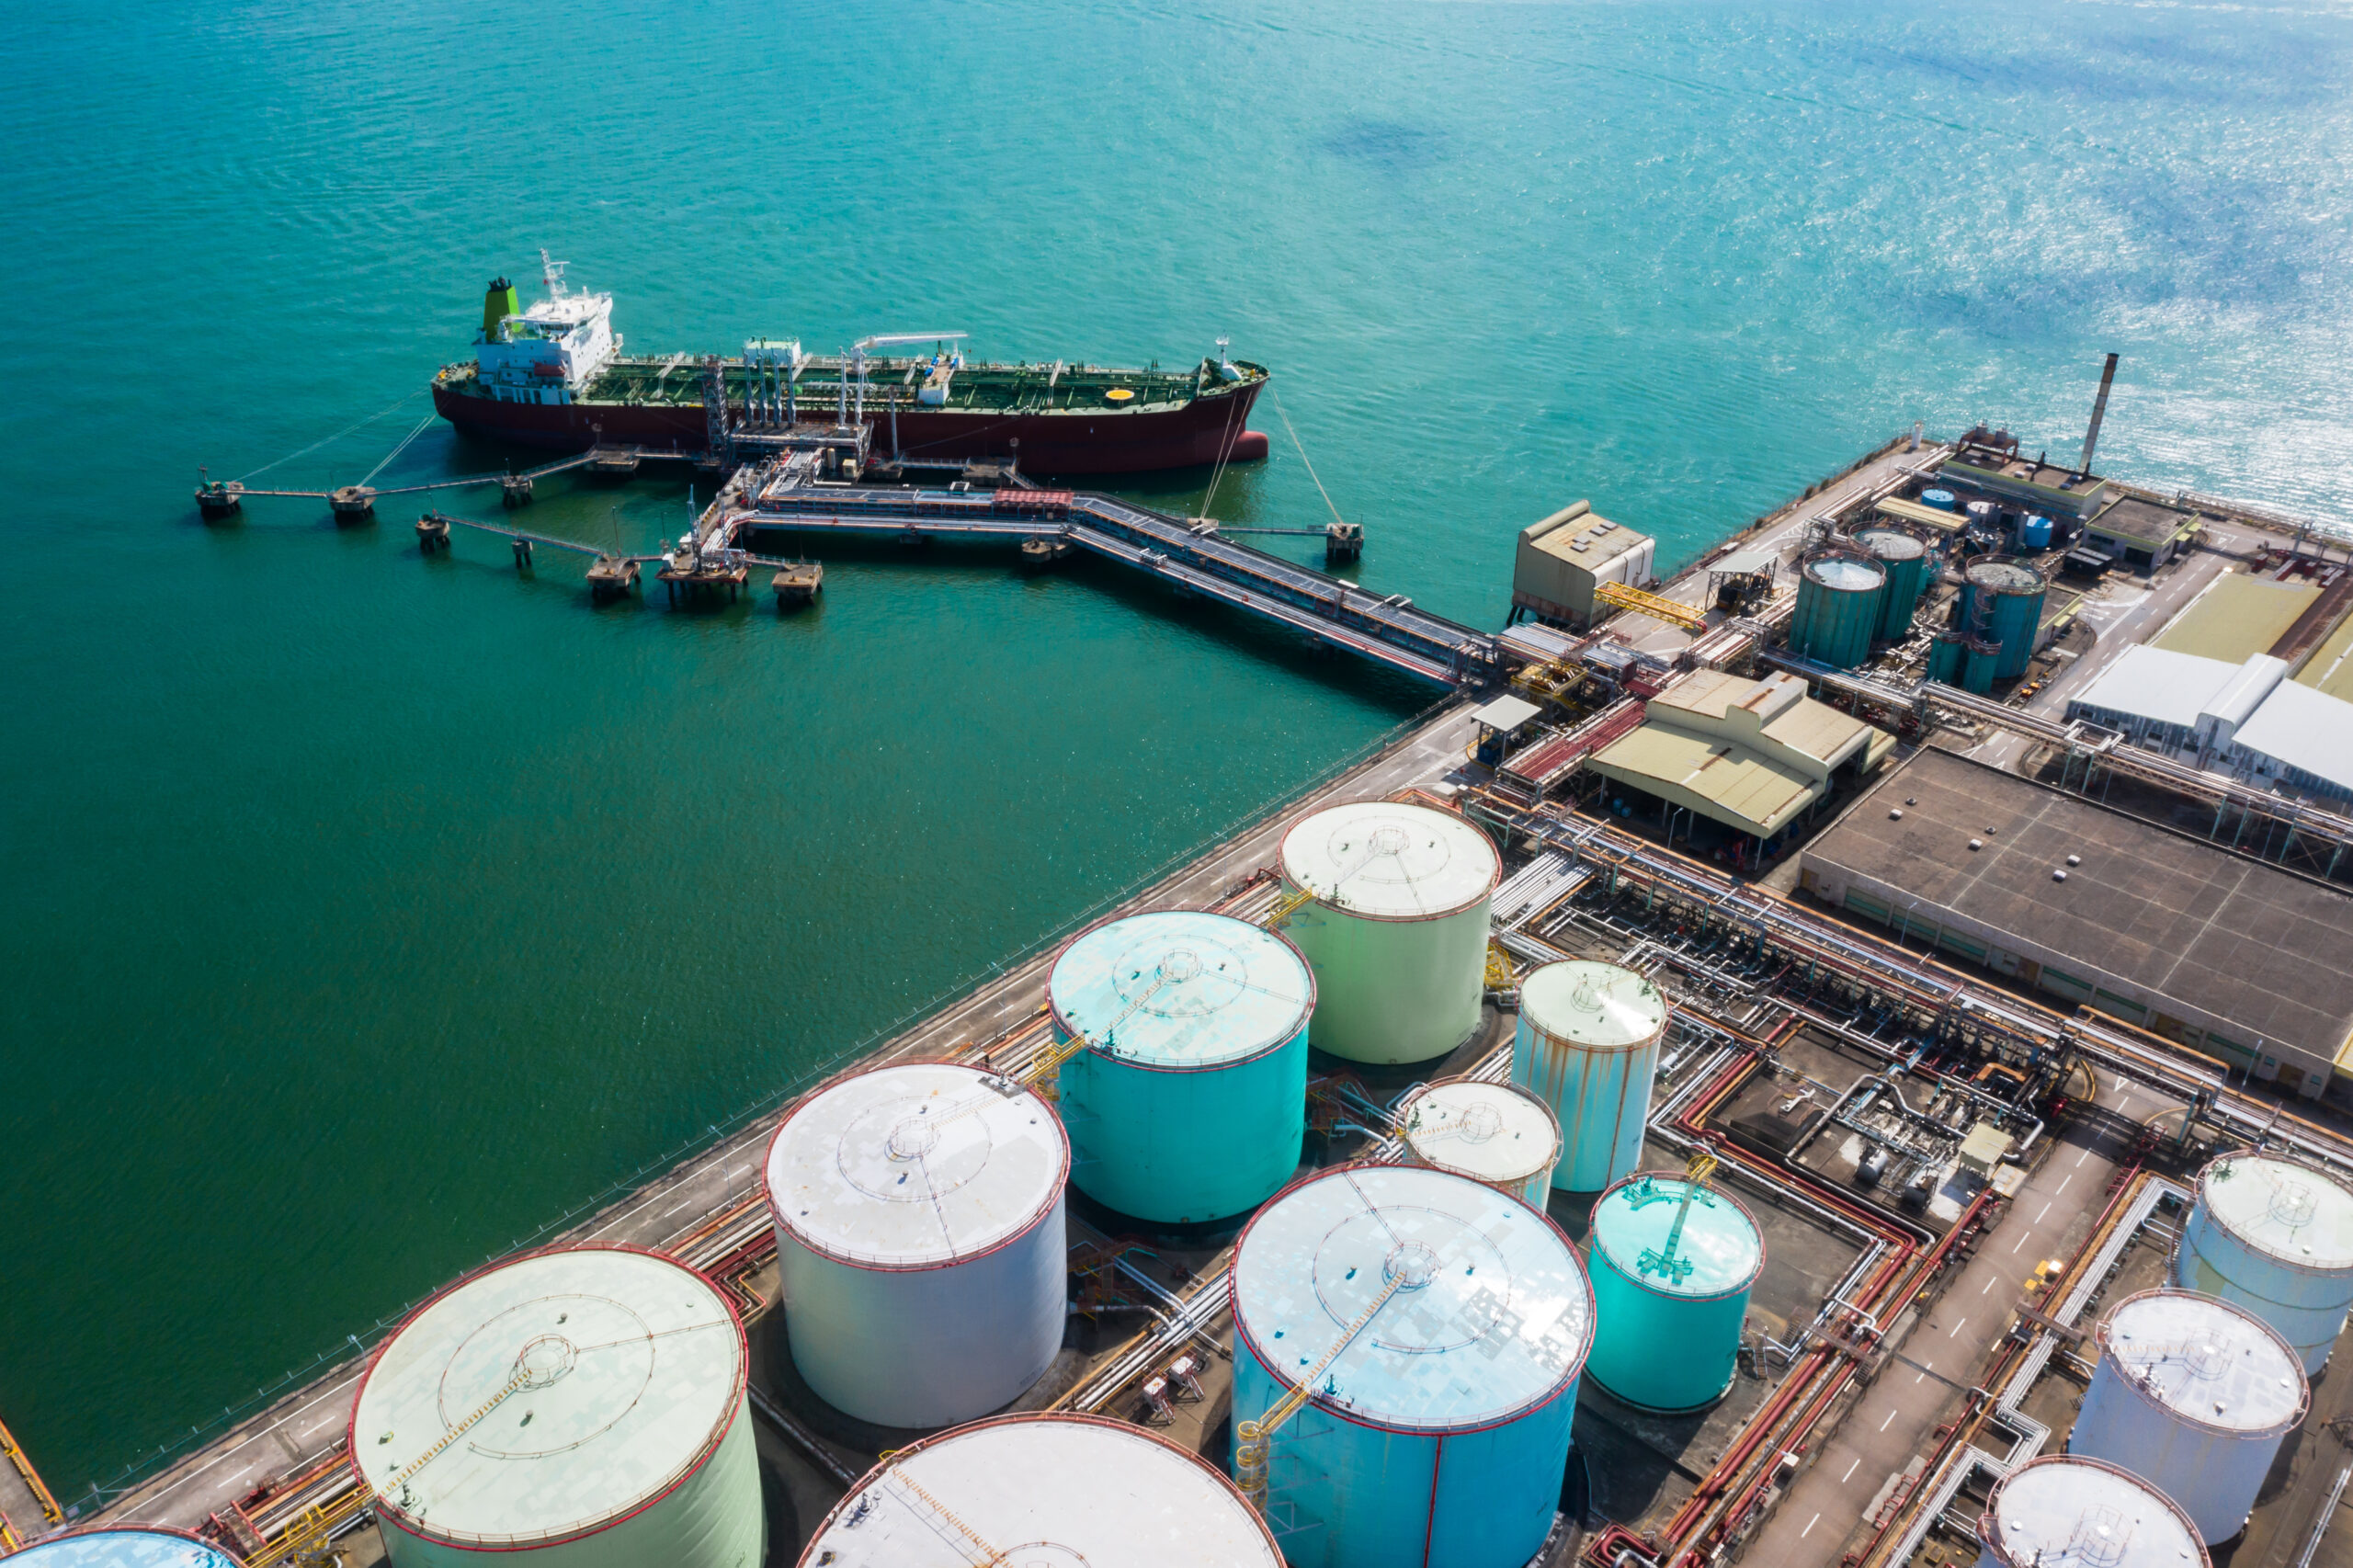 Aerial view of Oil tanker